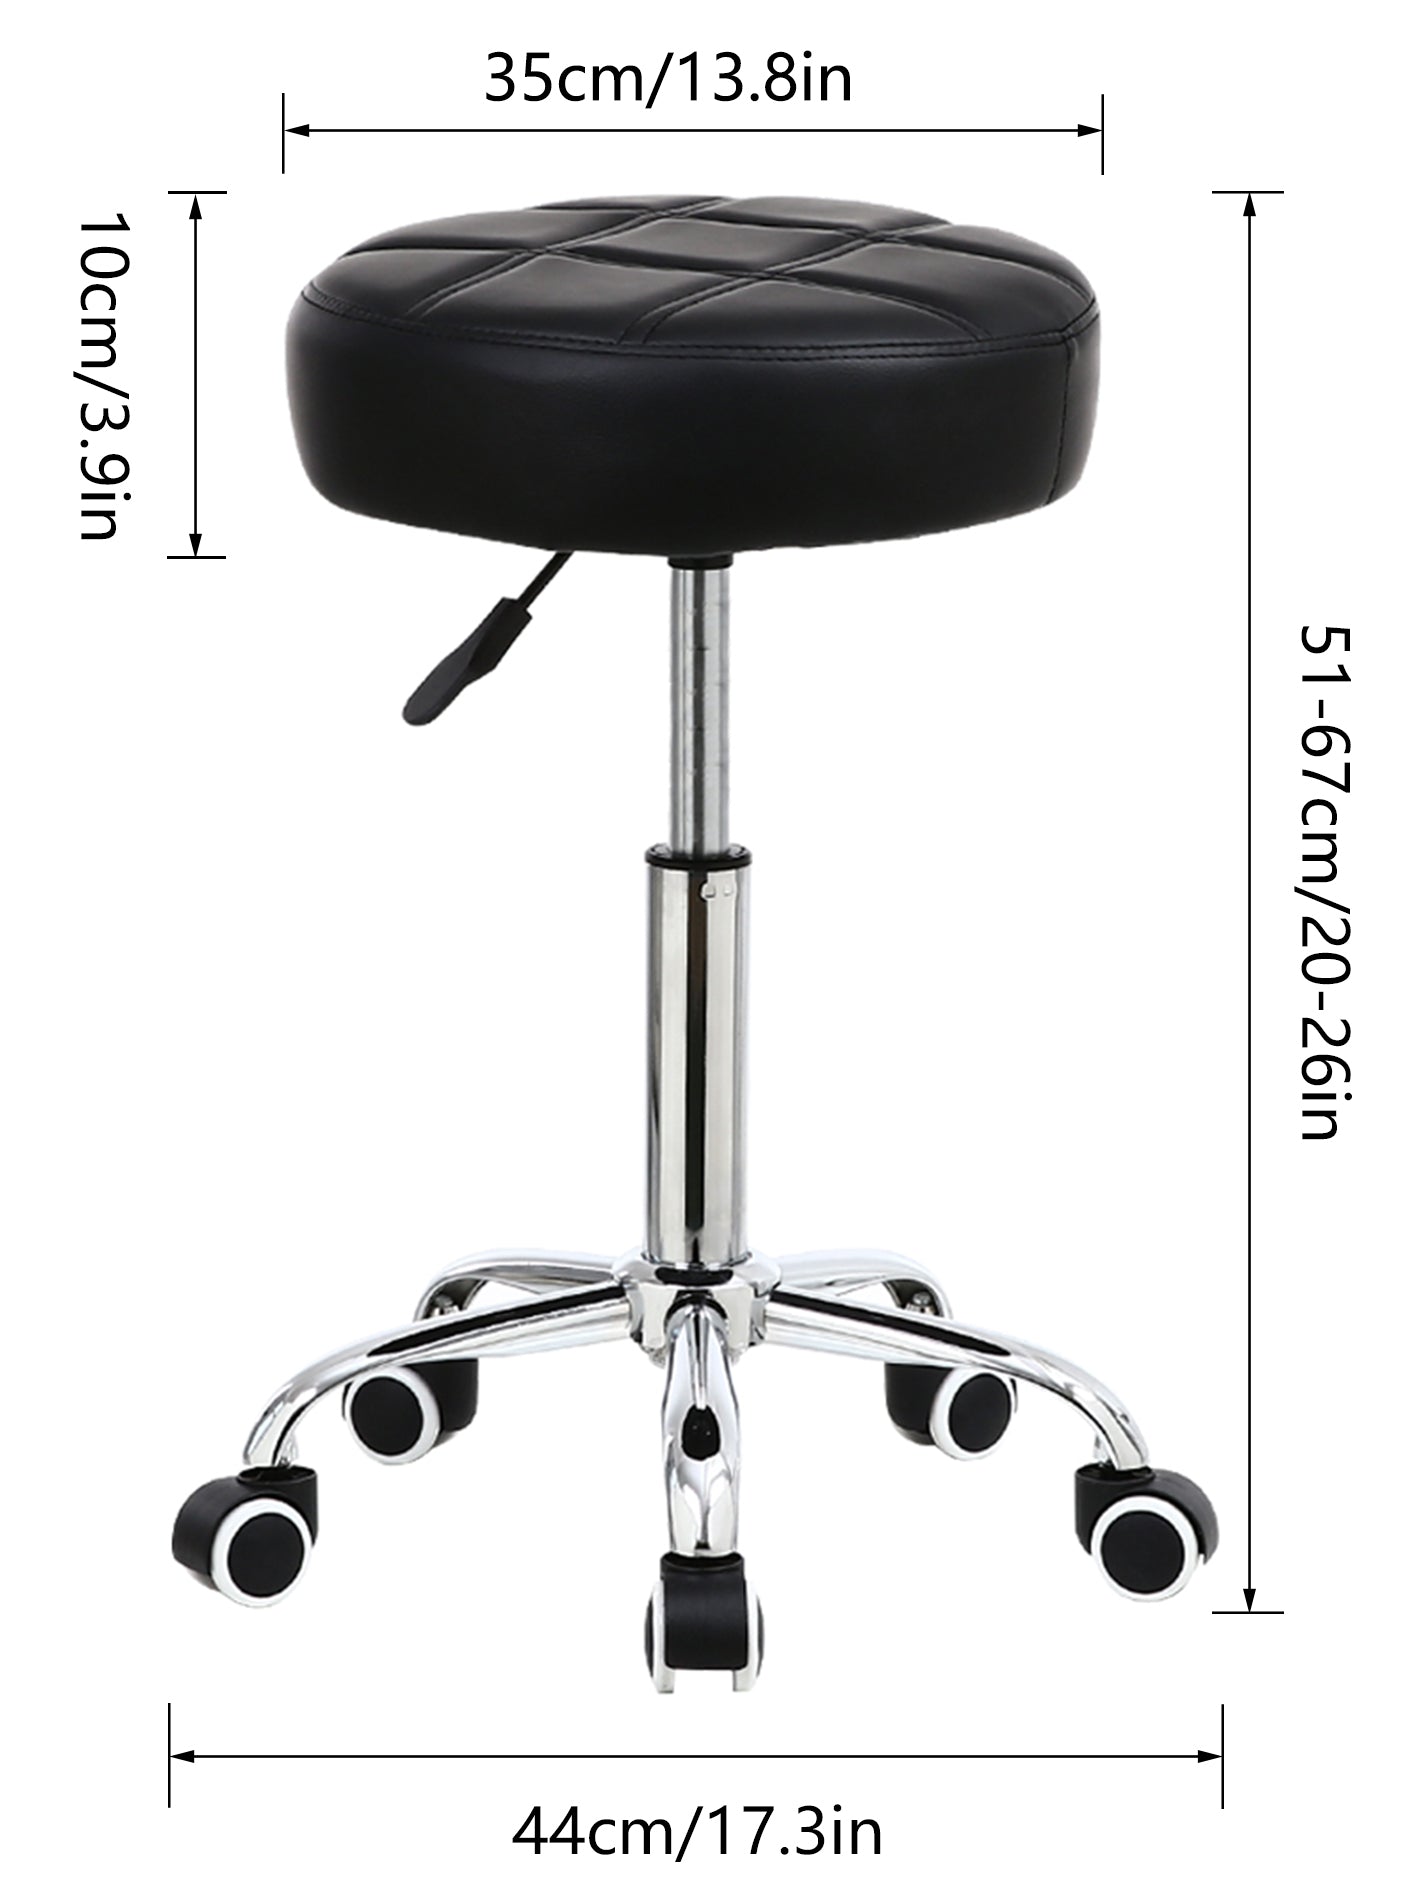 KKTONER Round Rolling Stool PU Leather Height Adjustable Swivel Counter stool Black